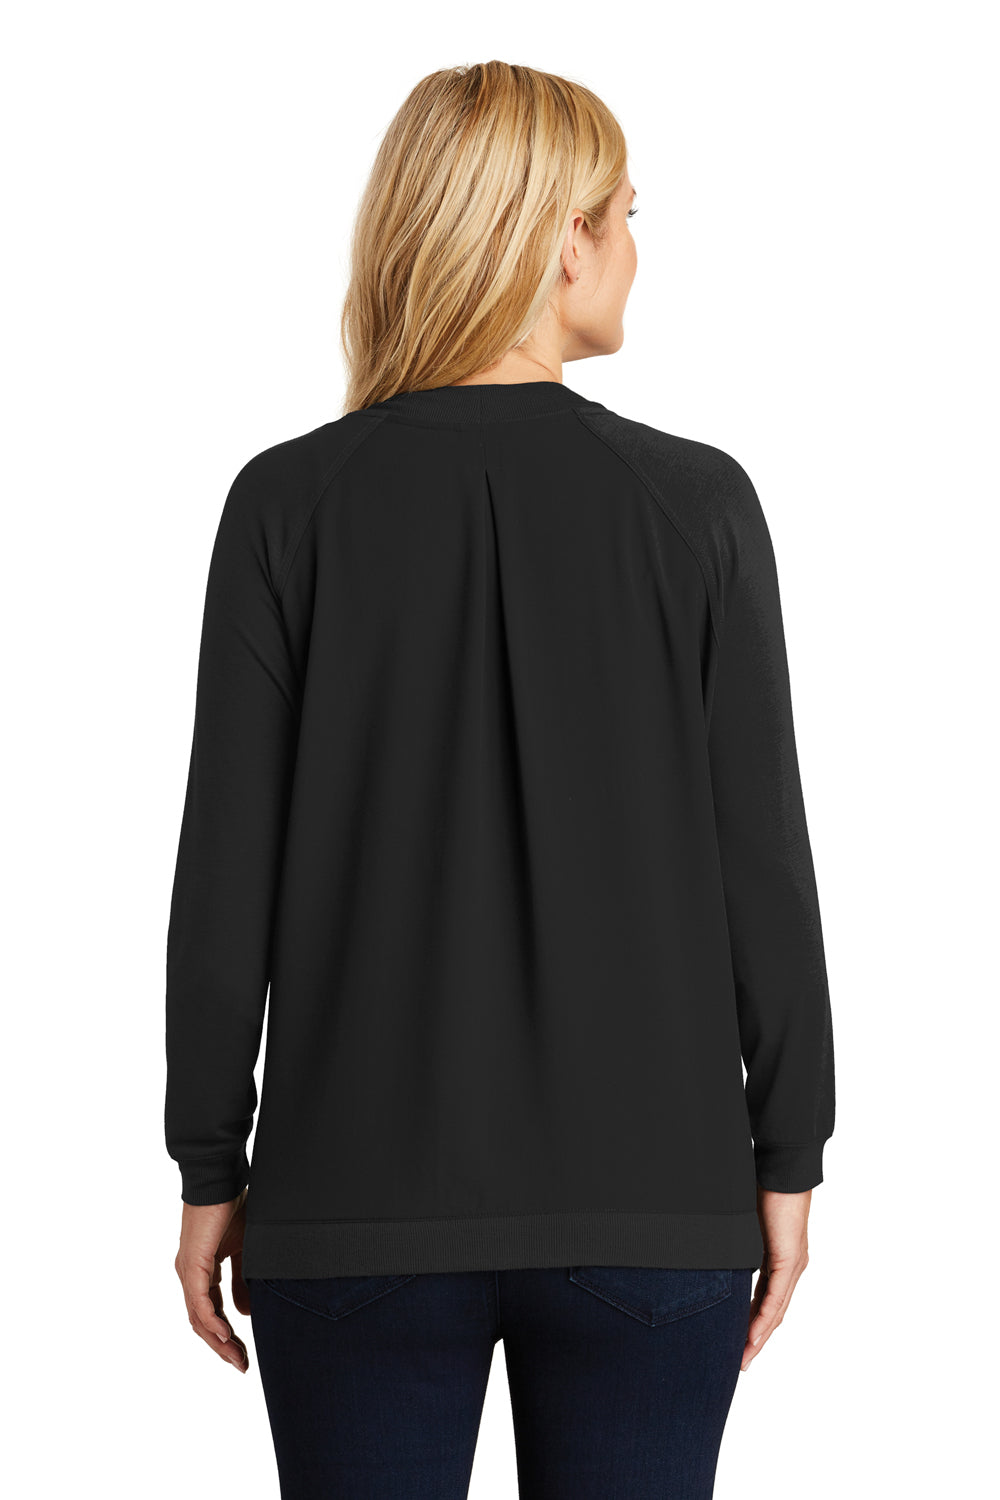 Port Authority LK5431 Womens Concept Bomber Long Sleeve Cardigan Sweater Black Back